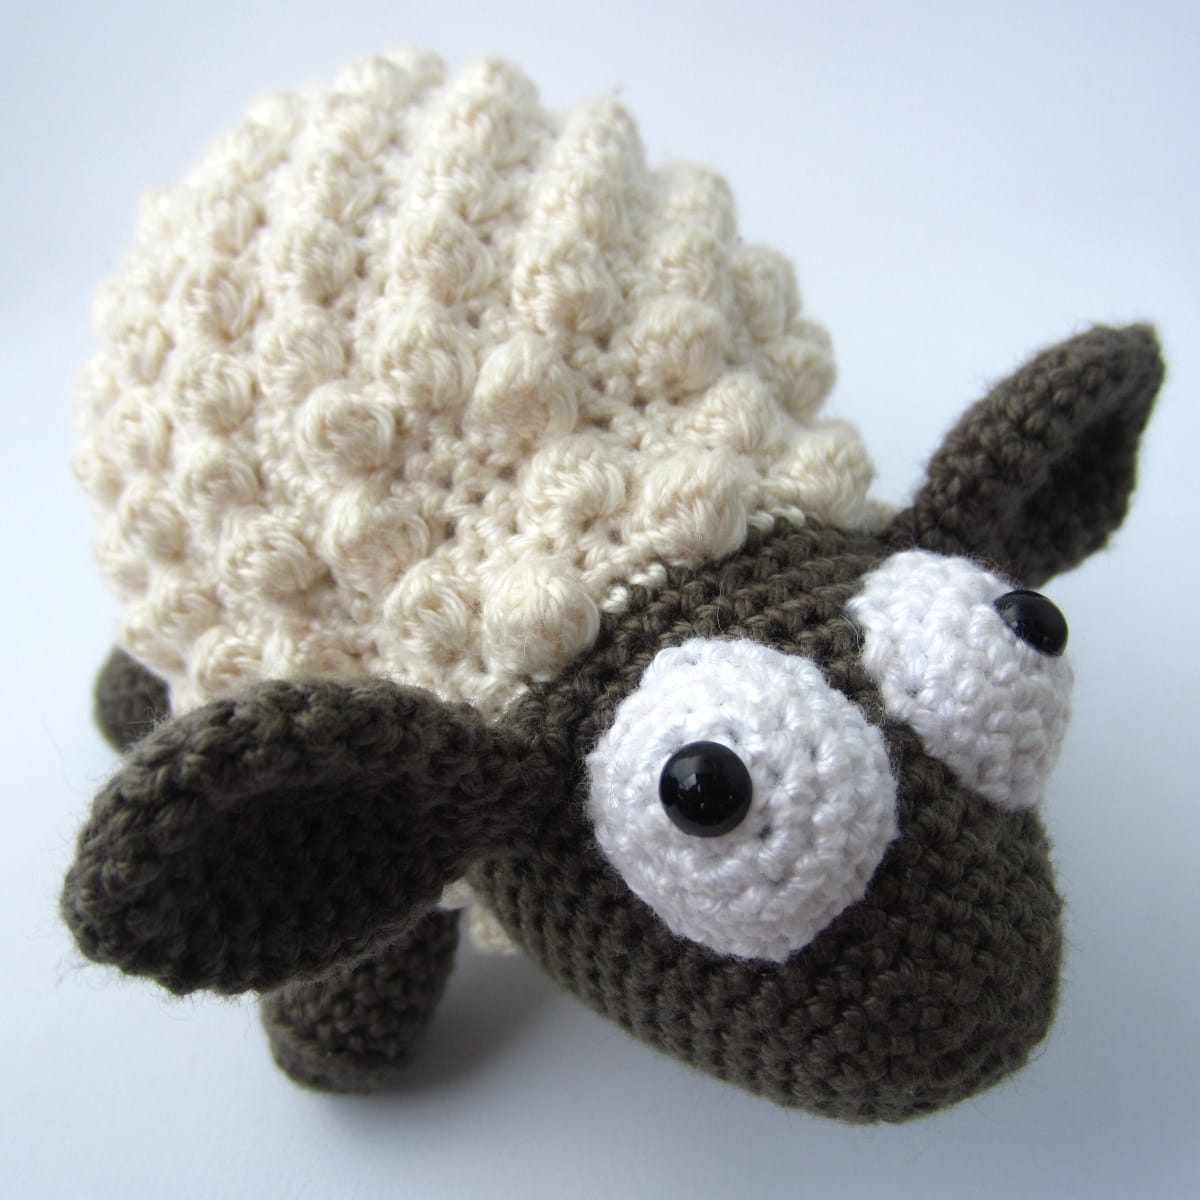 Crochet Sheep Pattern Amigurumi Crochet Sheep Pattern The Chub Sheep Supergurumi